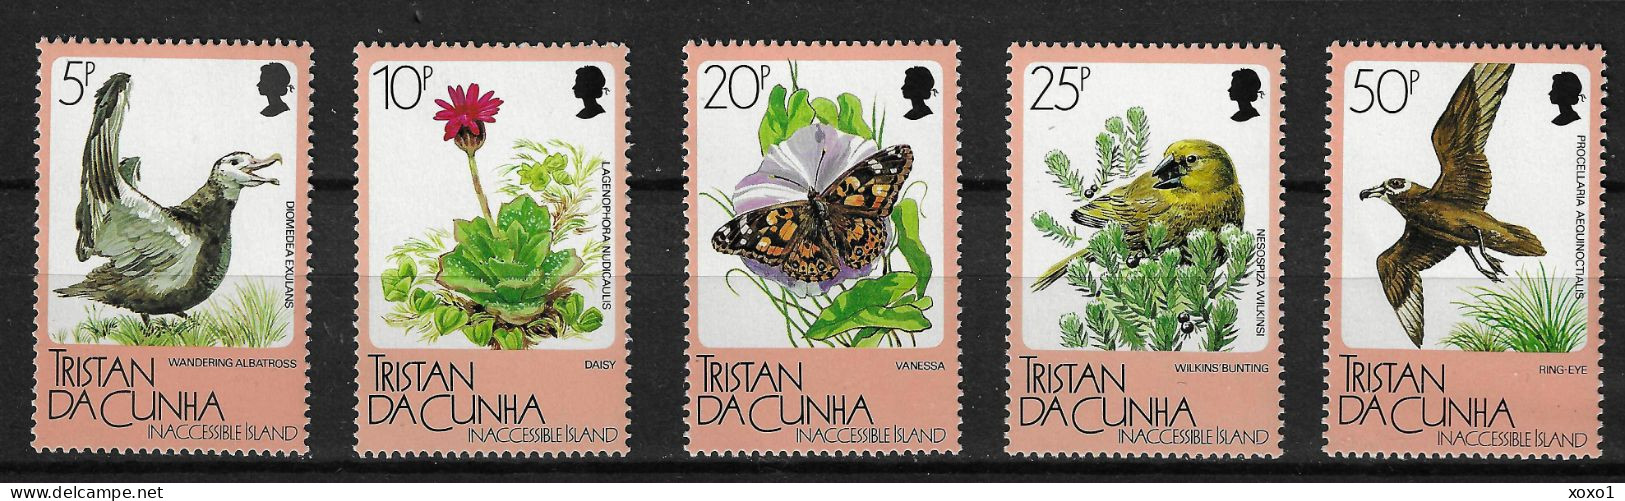 Tristan Da Cunha 1986 MiNr. 412 - 416 Inaccessible Island  Birds, Butterfies, Flowers  5v  MNH** 7.50€ - Tristan Da Cunha